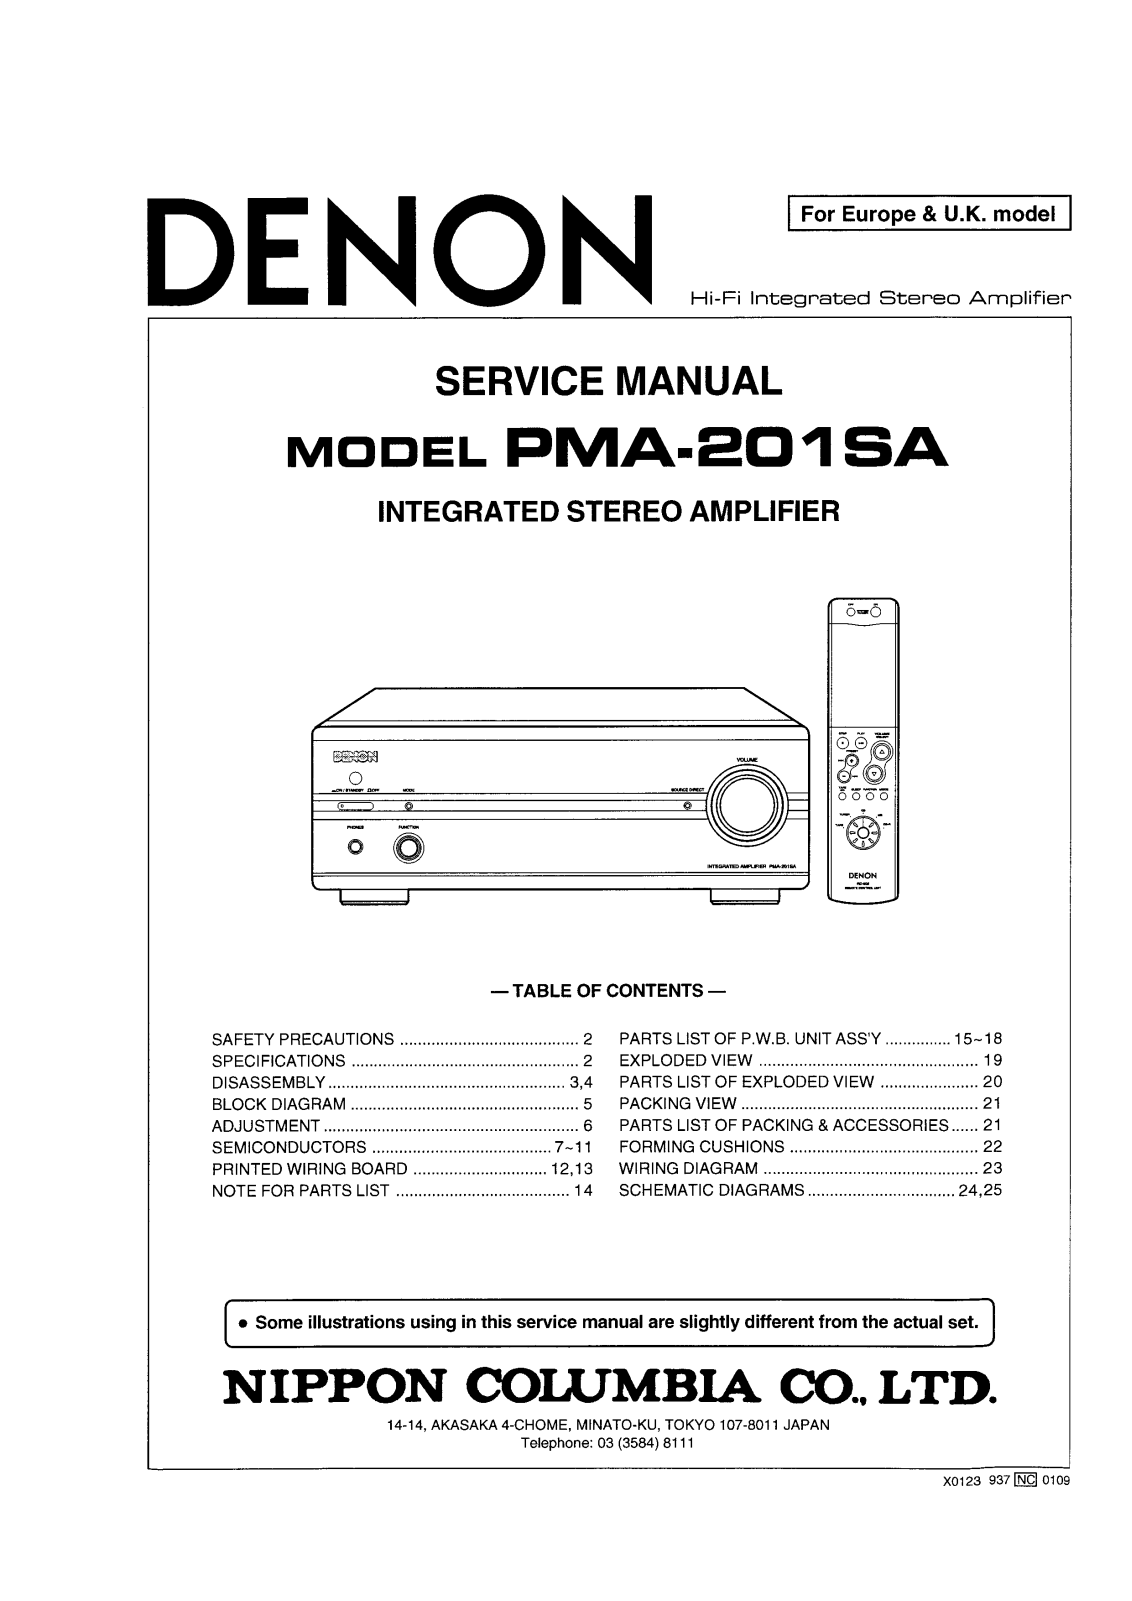 Denon PMA - 201 SA Service Manual